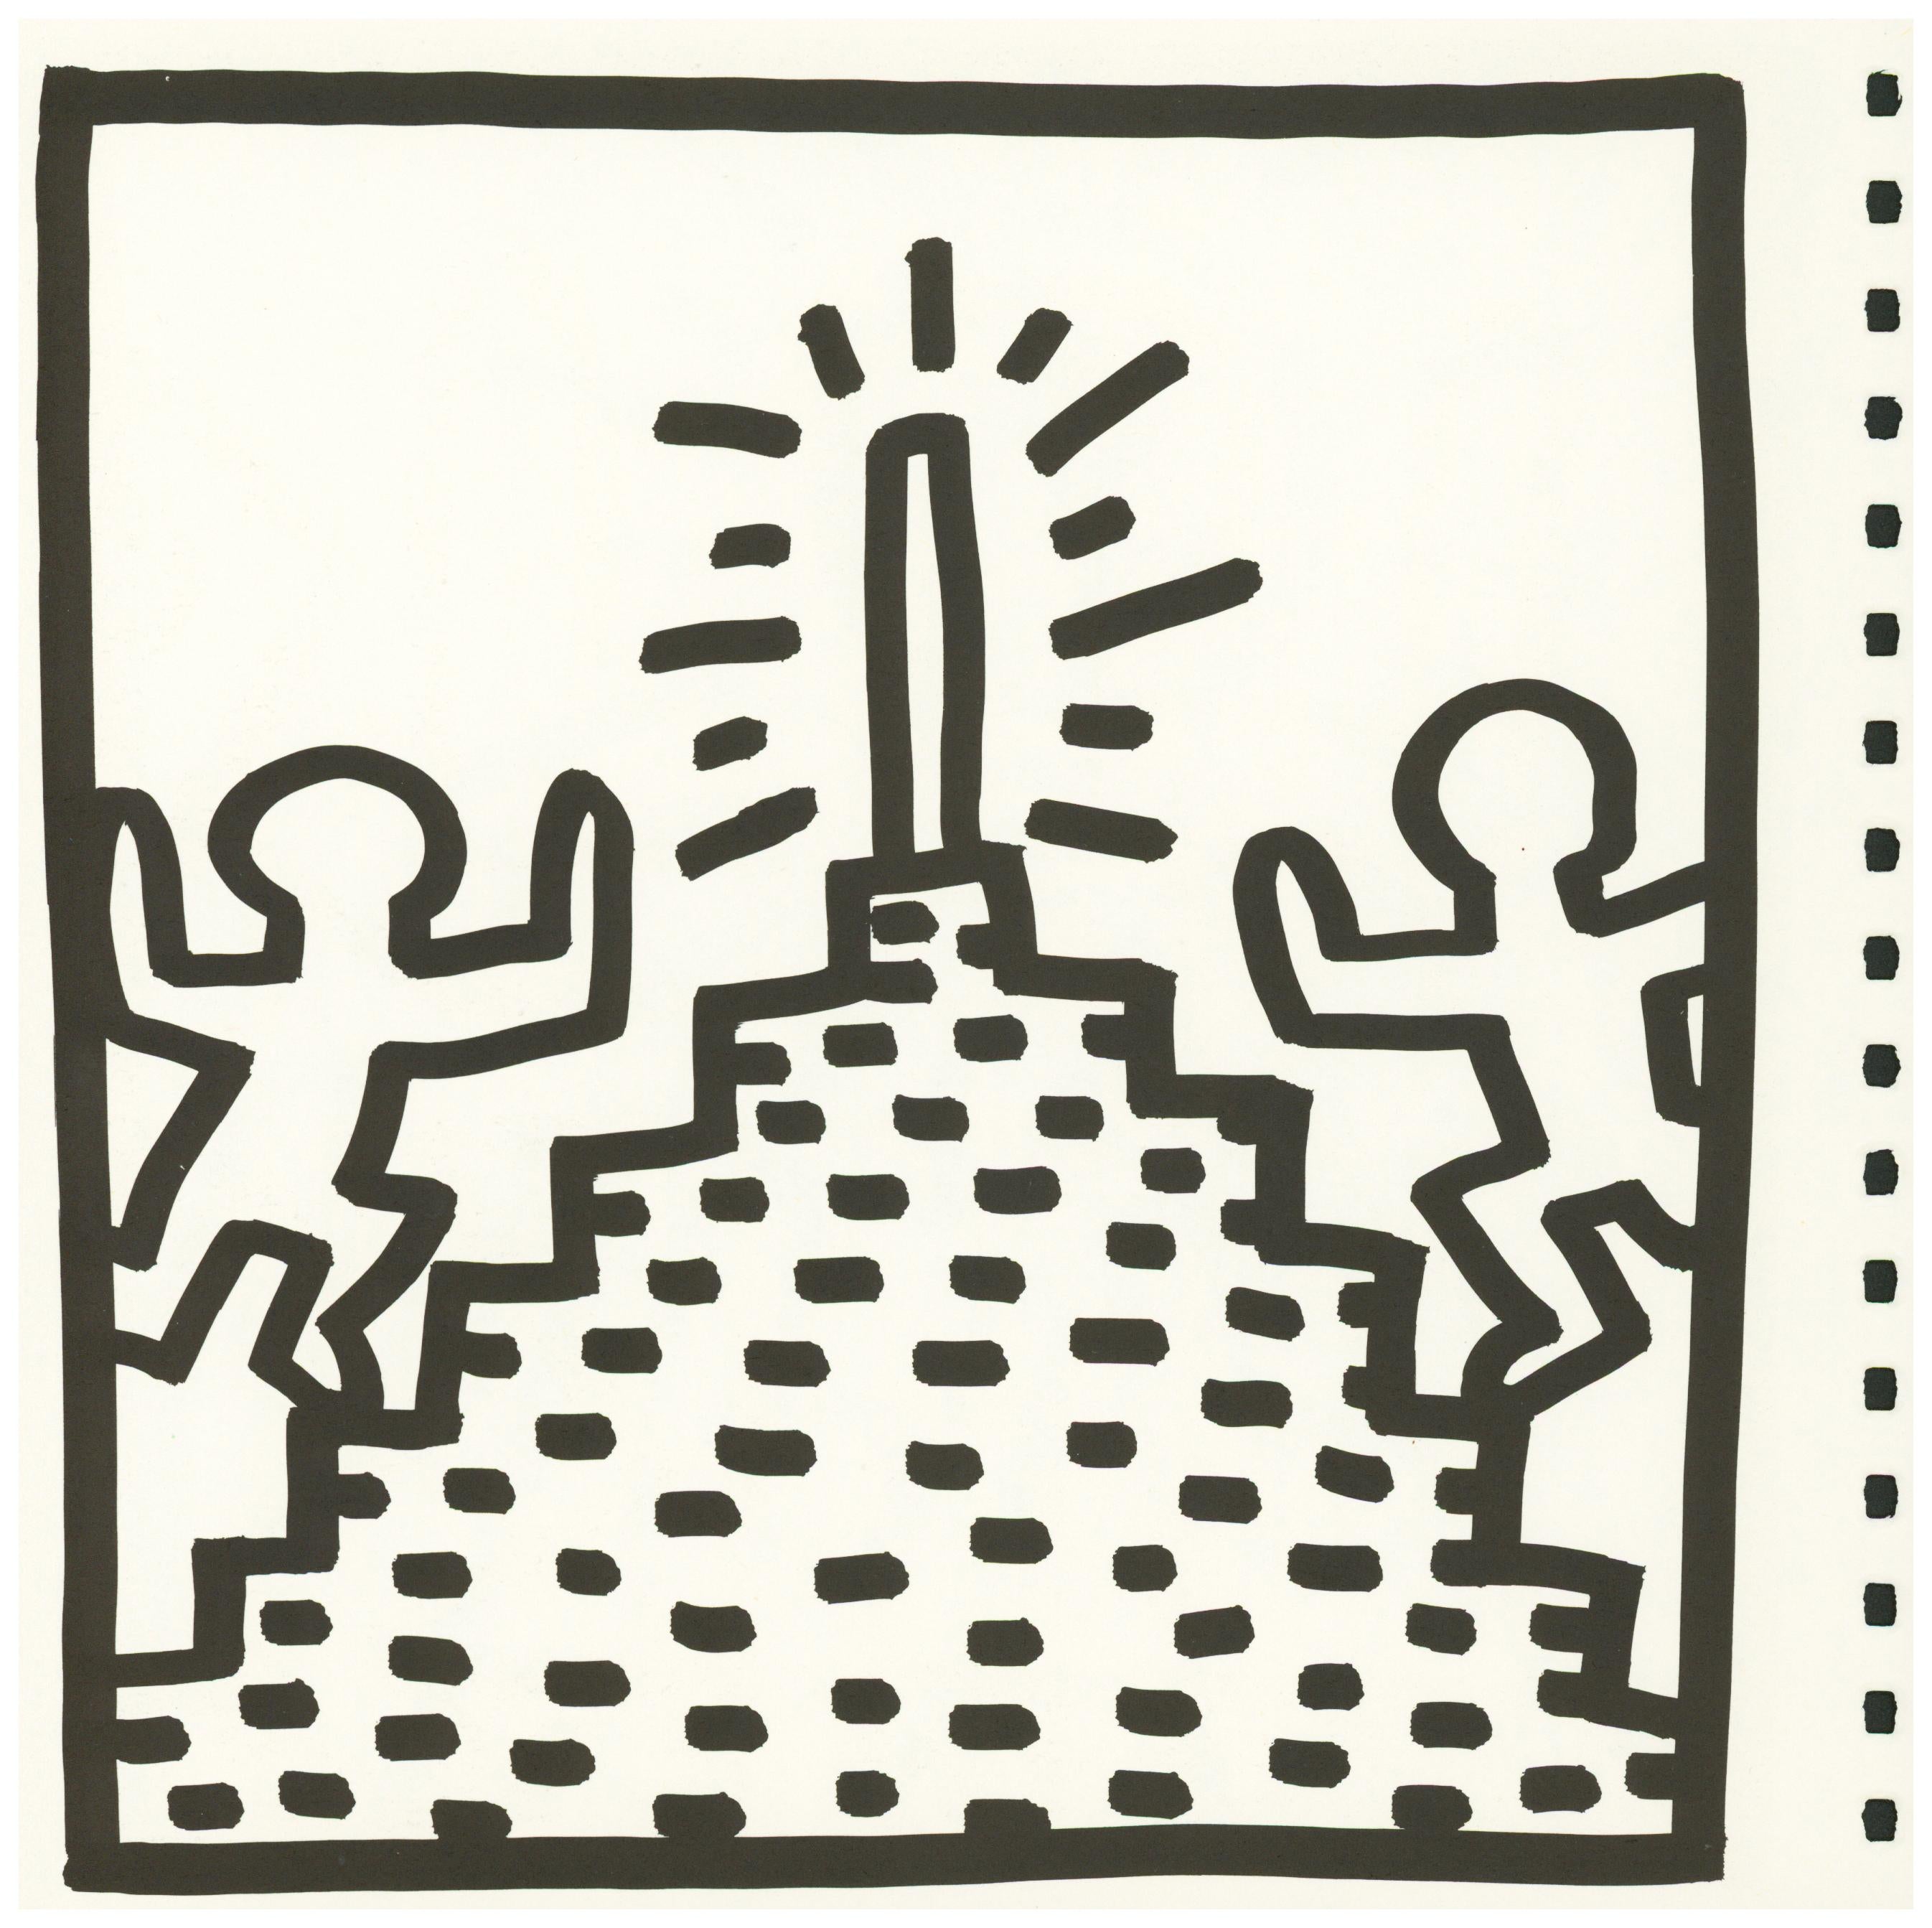 Keith Haring (untitled) pyramid lithograph 1982 (Keith Haring prints) - Print by (after) Keith Haring